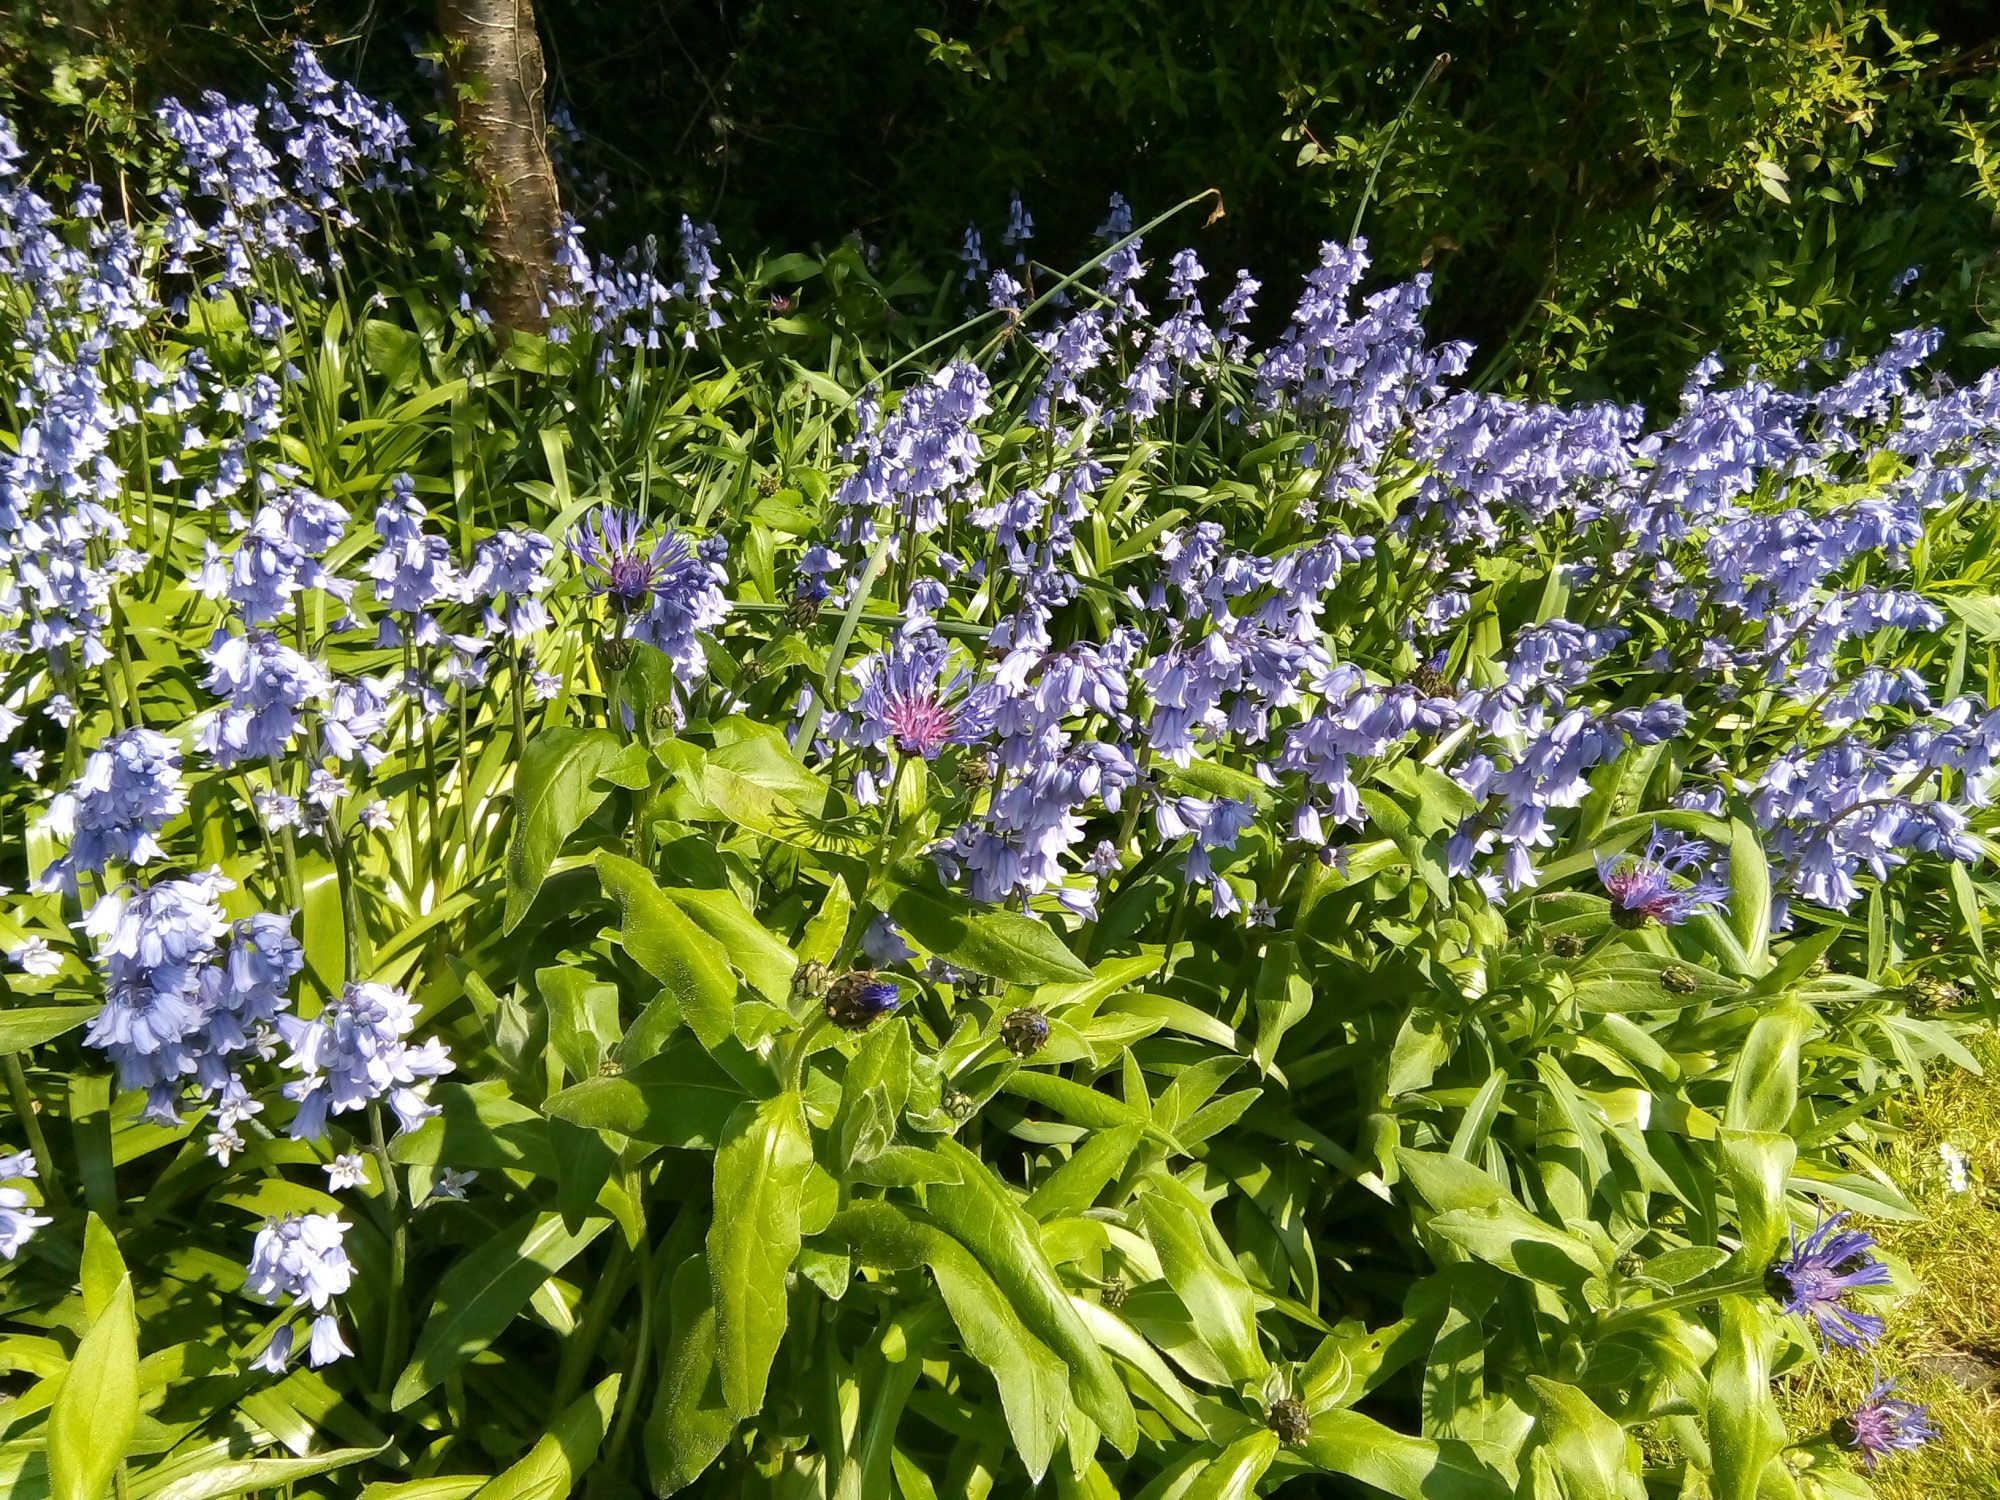 Bluebells in full flower on a sunny spring day